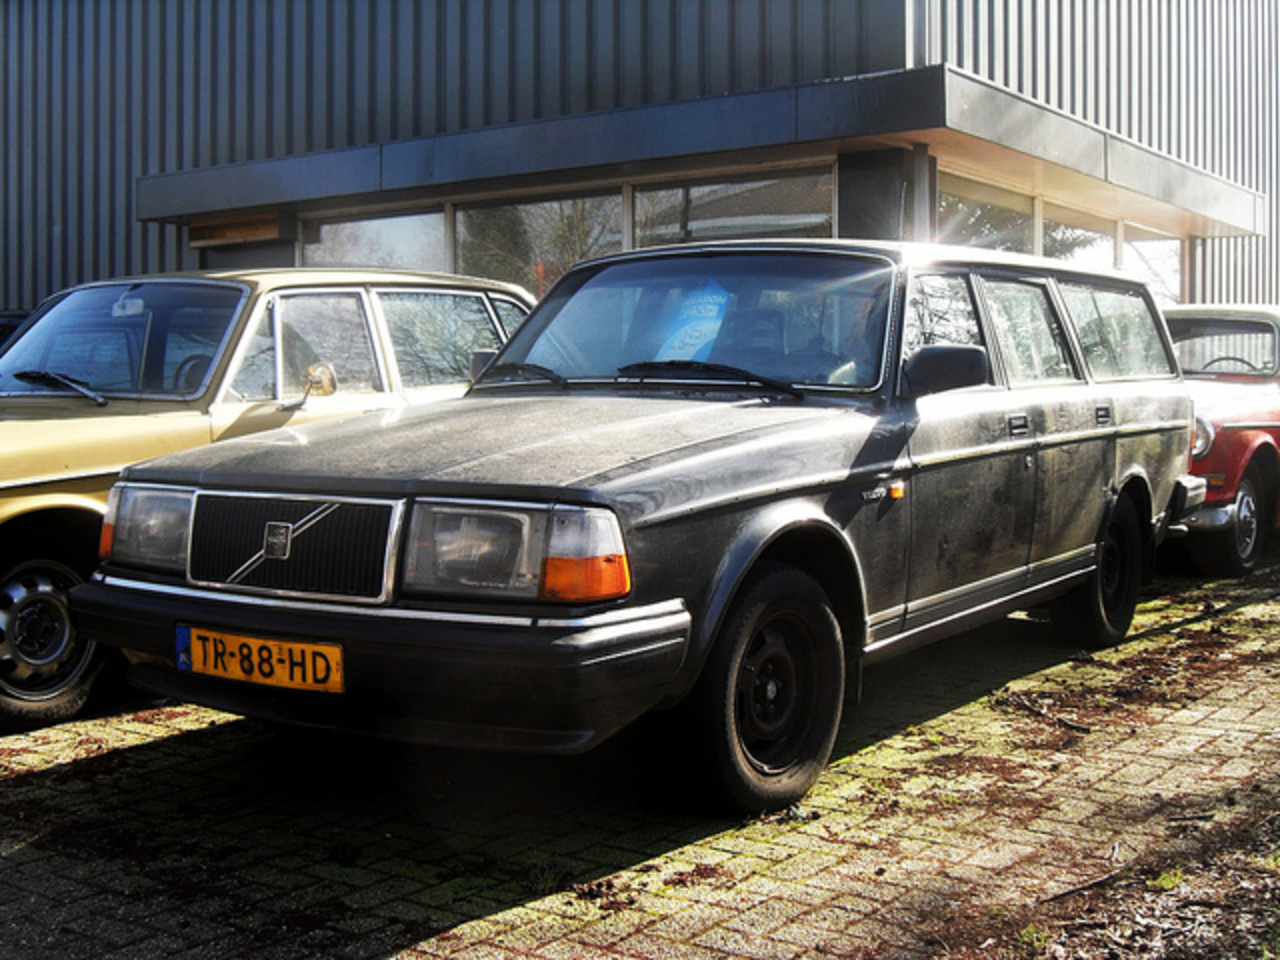 1988 Volvo 245 GL TR-88-HD